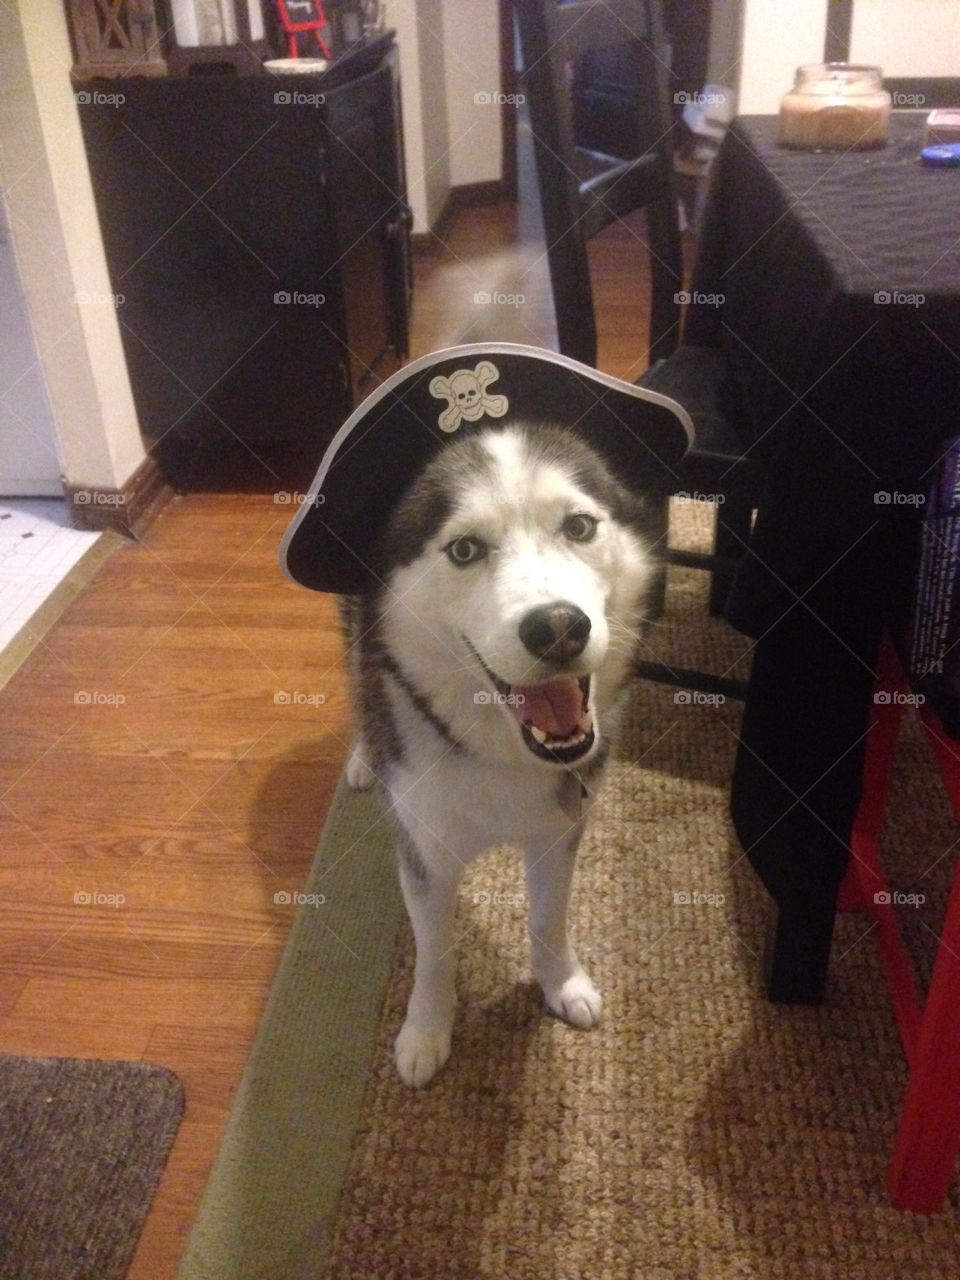 Dog in a pirate hat looking super menacing